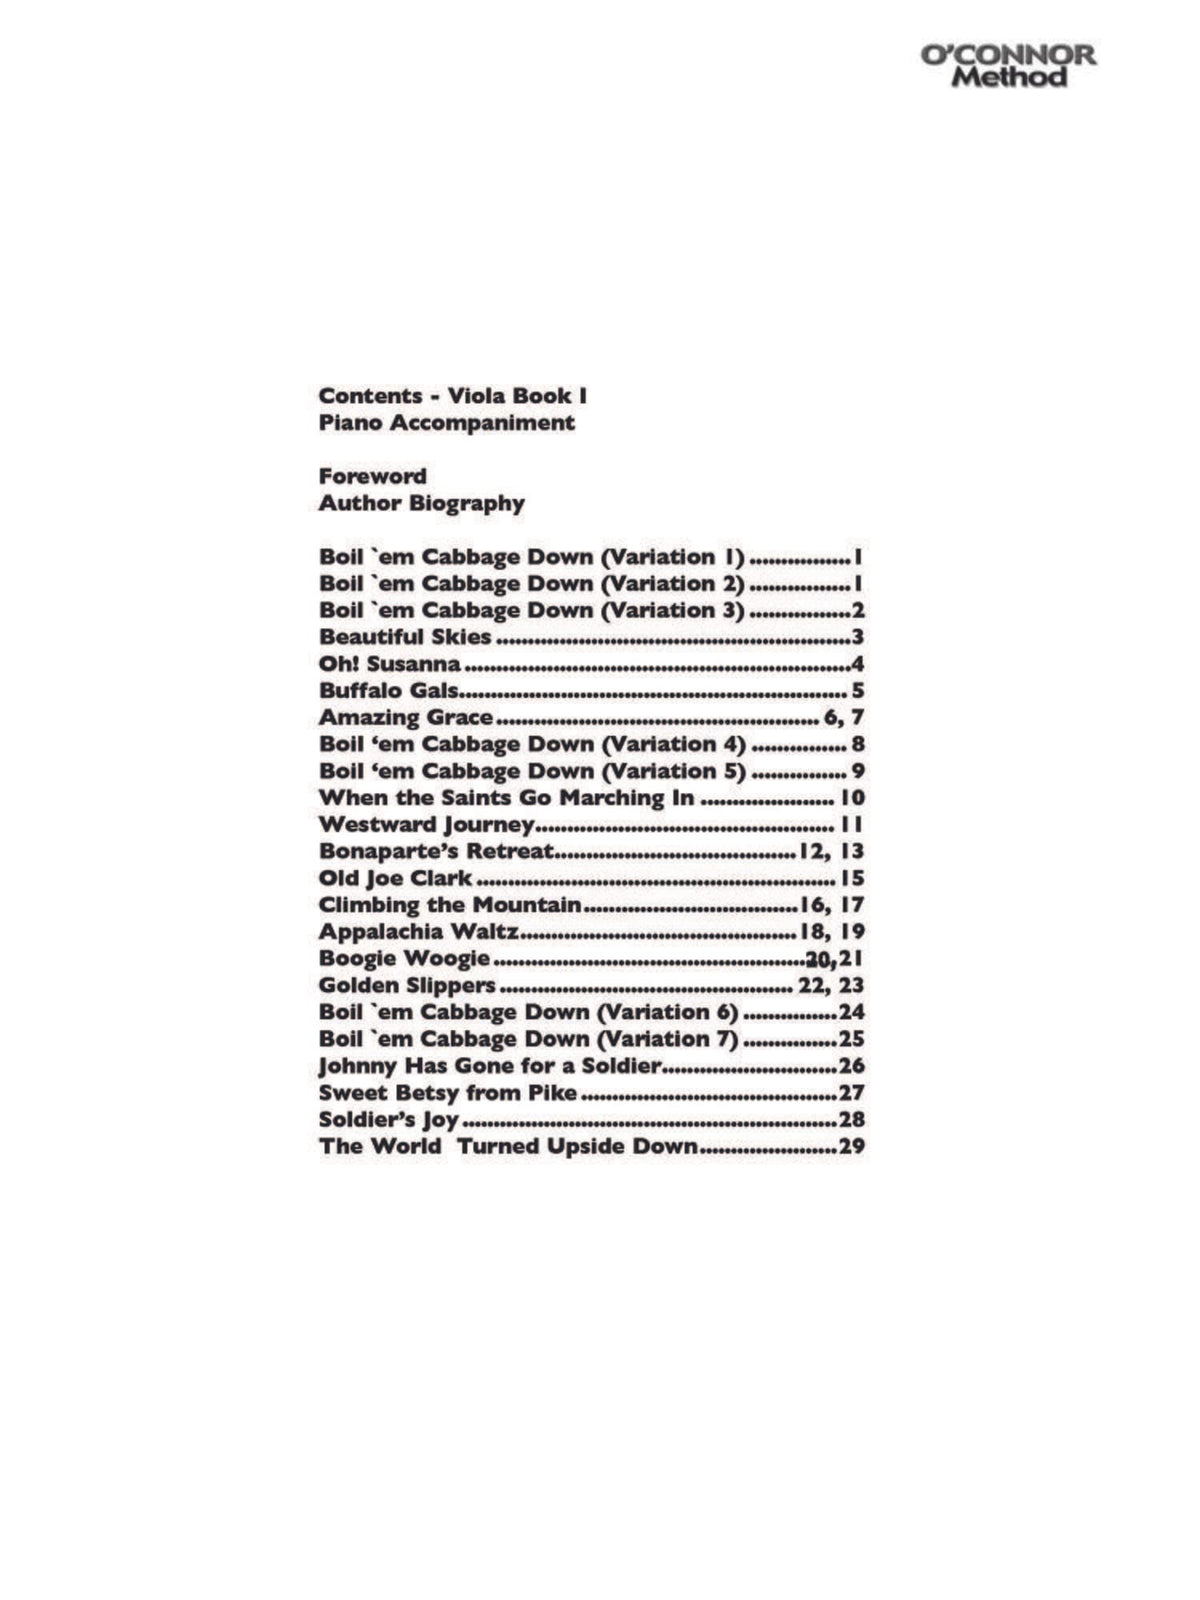 O'Connor Viola Method Book I - Piano Accompaniment - Digital Download